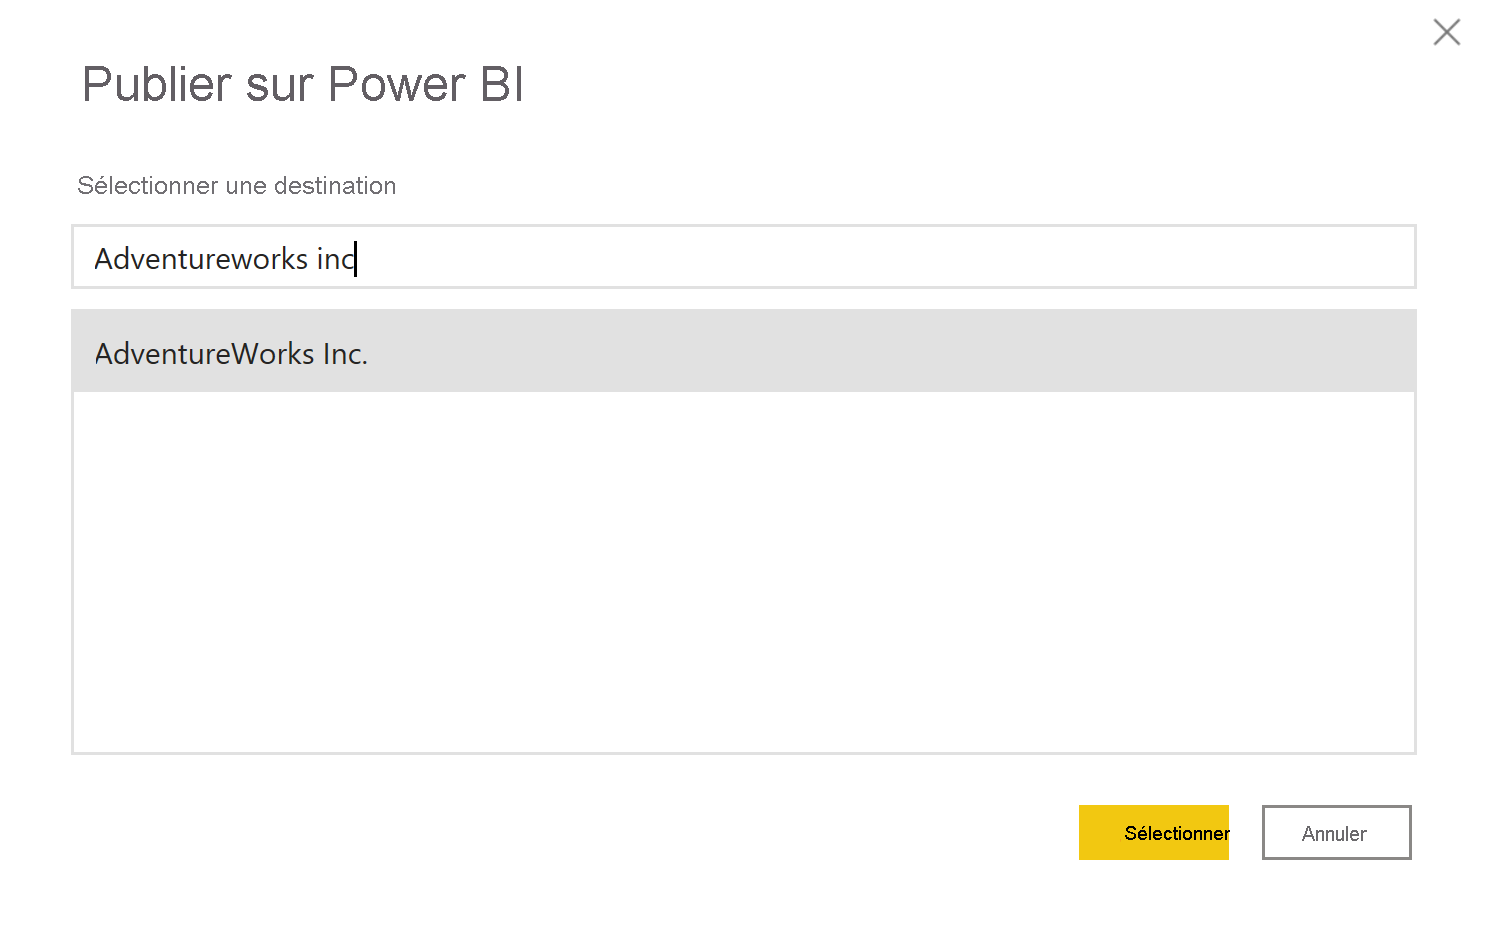 Screenshot of publishing the report to the Power BI service.